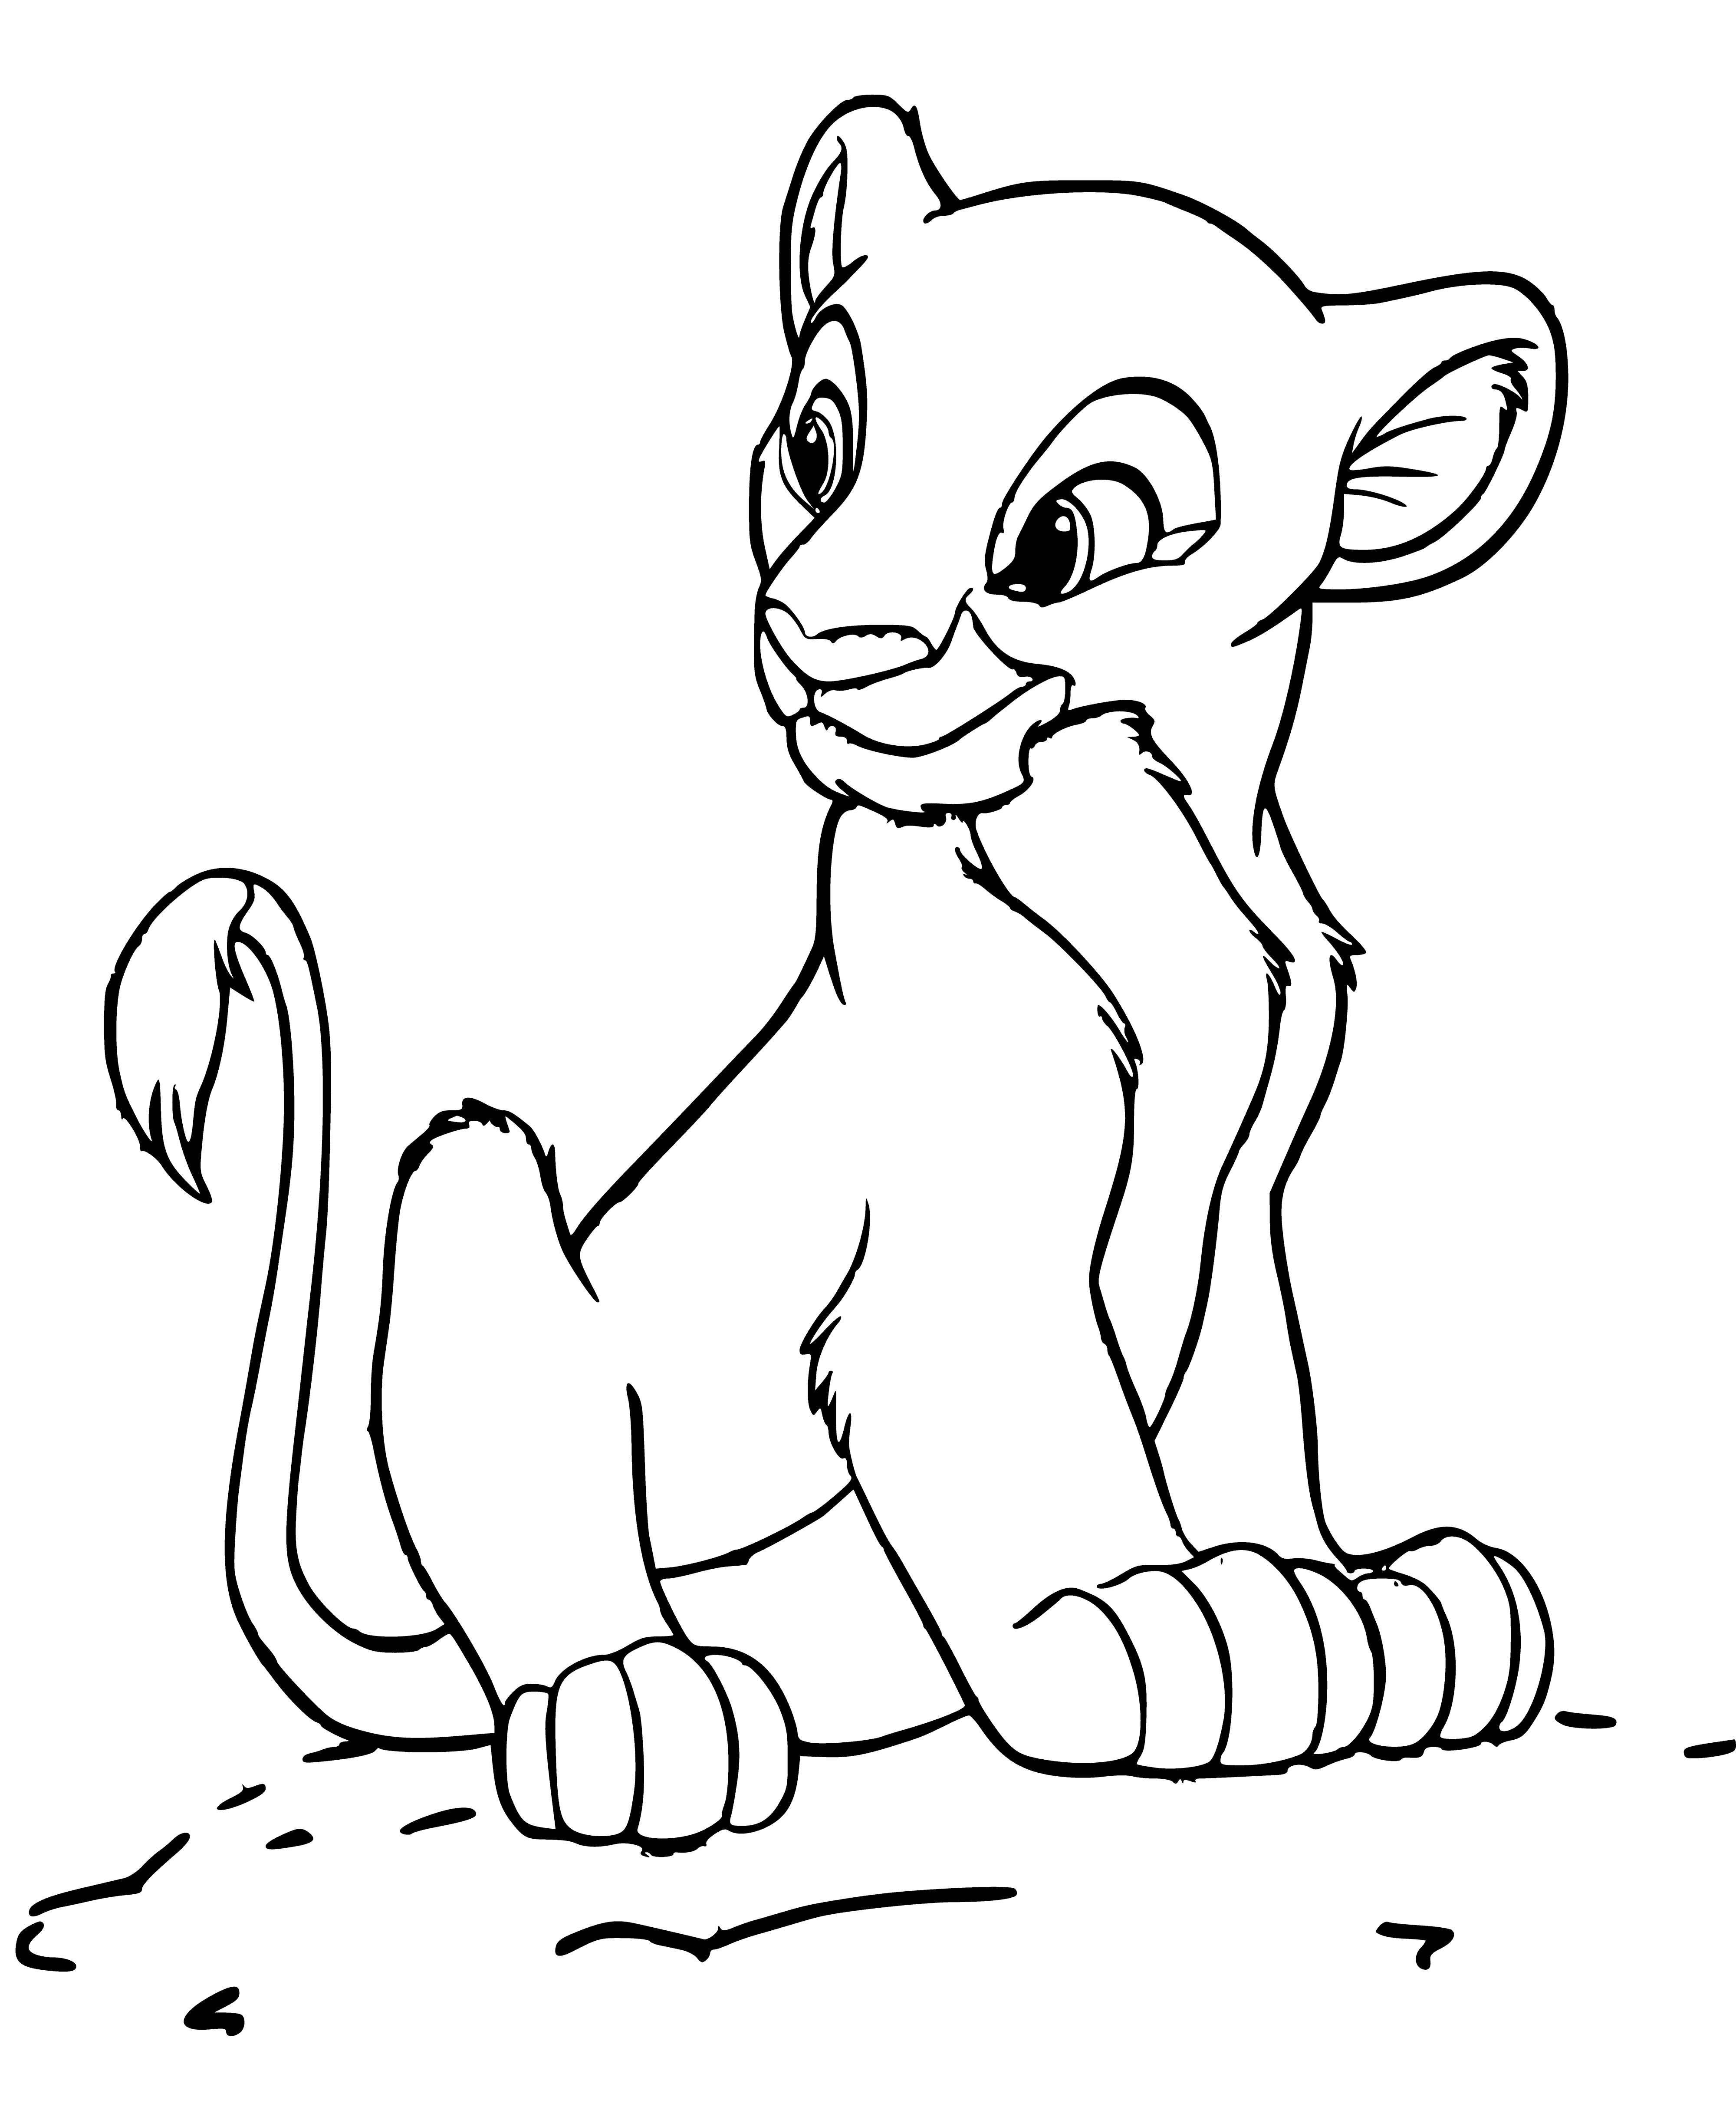 Simba's Girlfriend - Nala coloring page